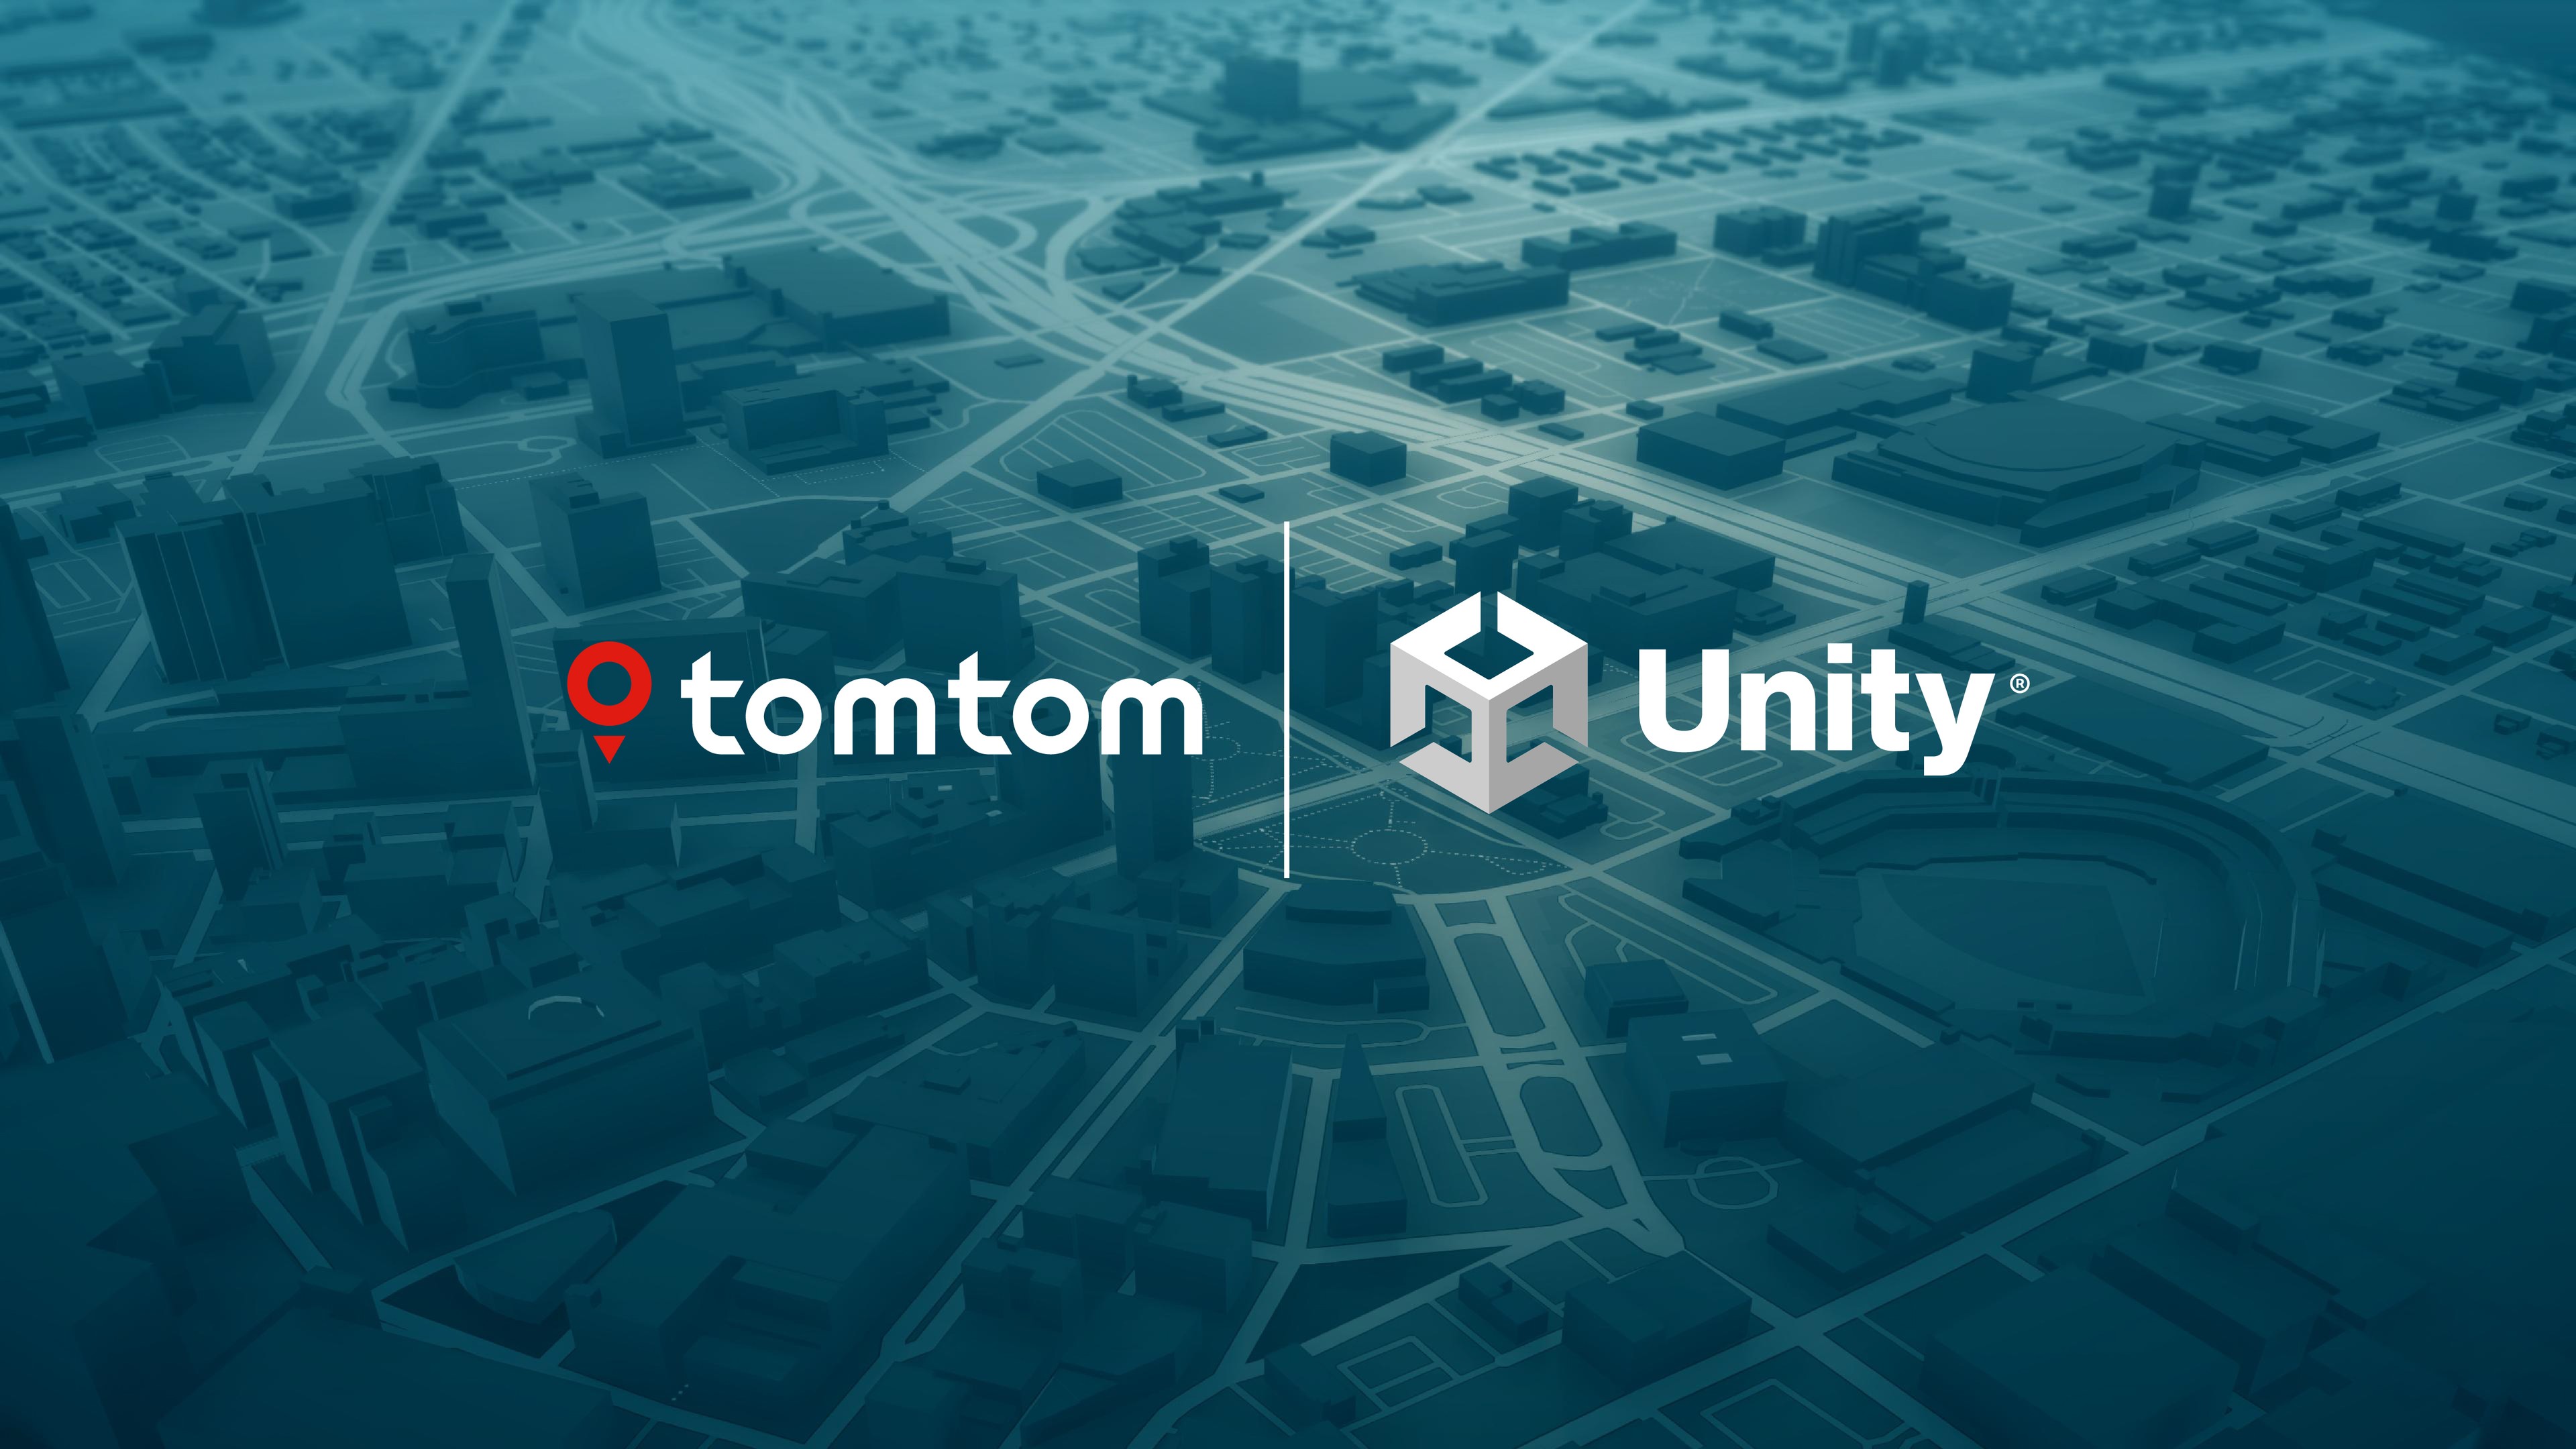 Unity and TomTom: Partnering to make next generation maps | TomTom Newsroom